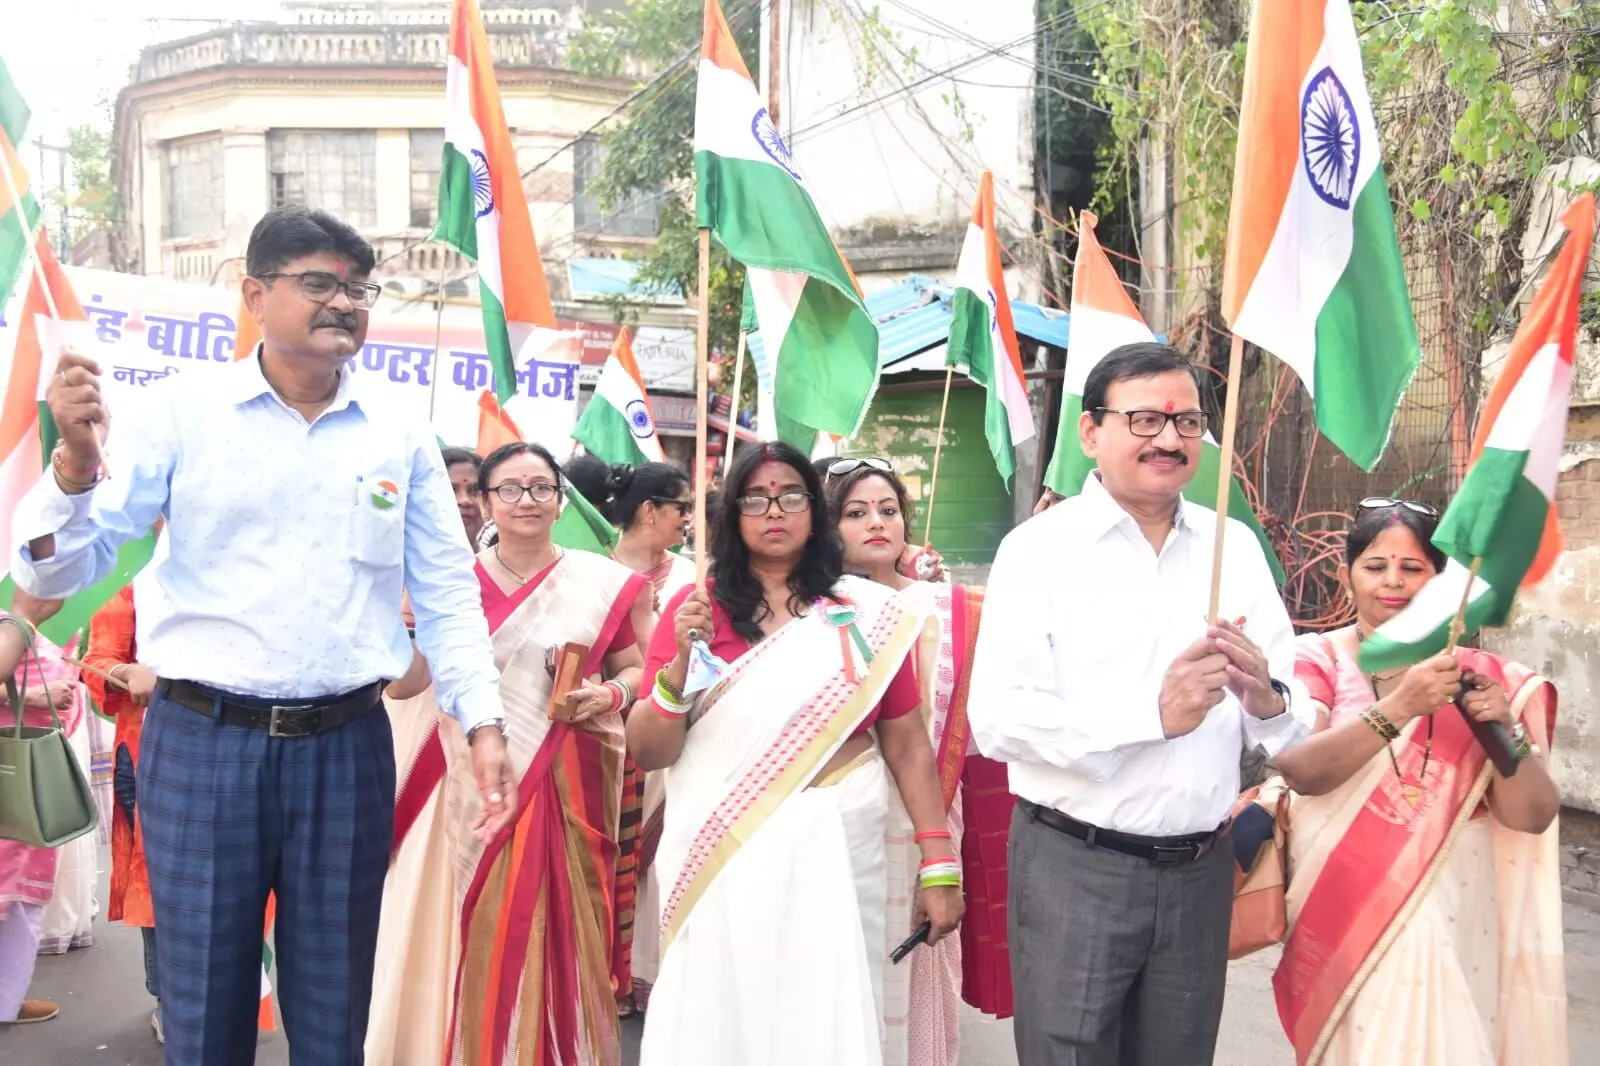 सहाय सिंह बालिका इंटर कॉलेज नरही ने प्रभात फेरी निकाल कर मनाया आजादी का अमृत महोत्सव